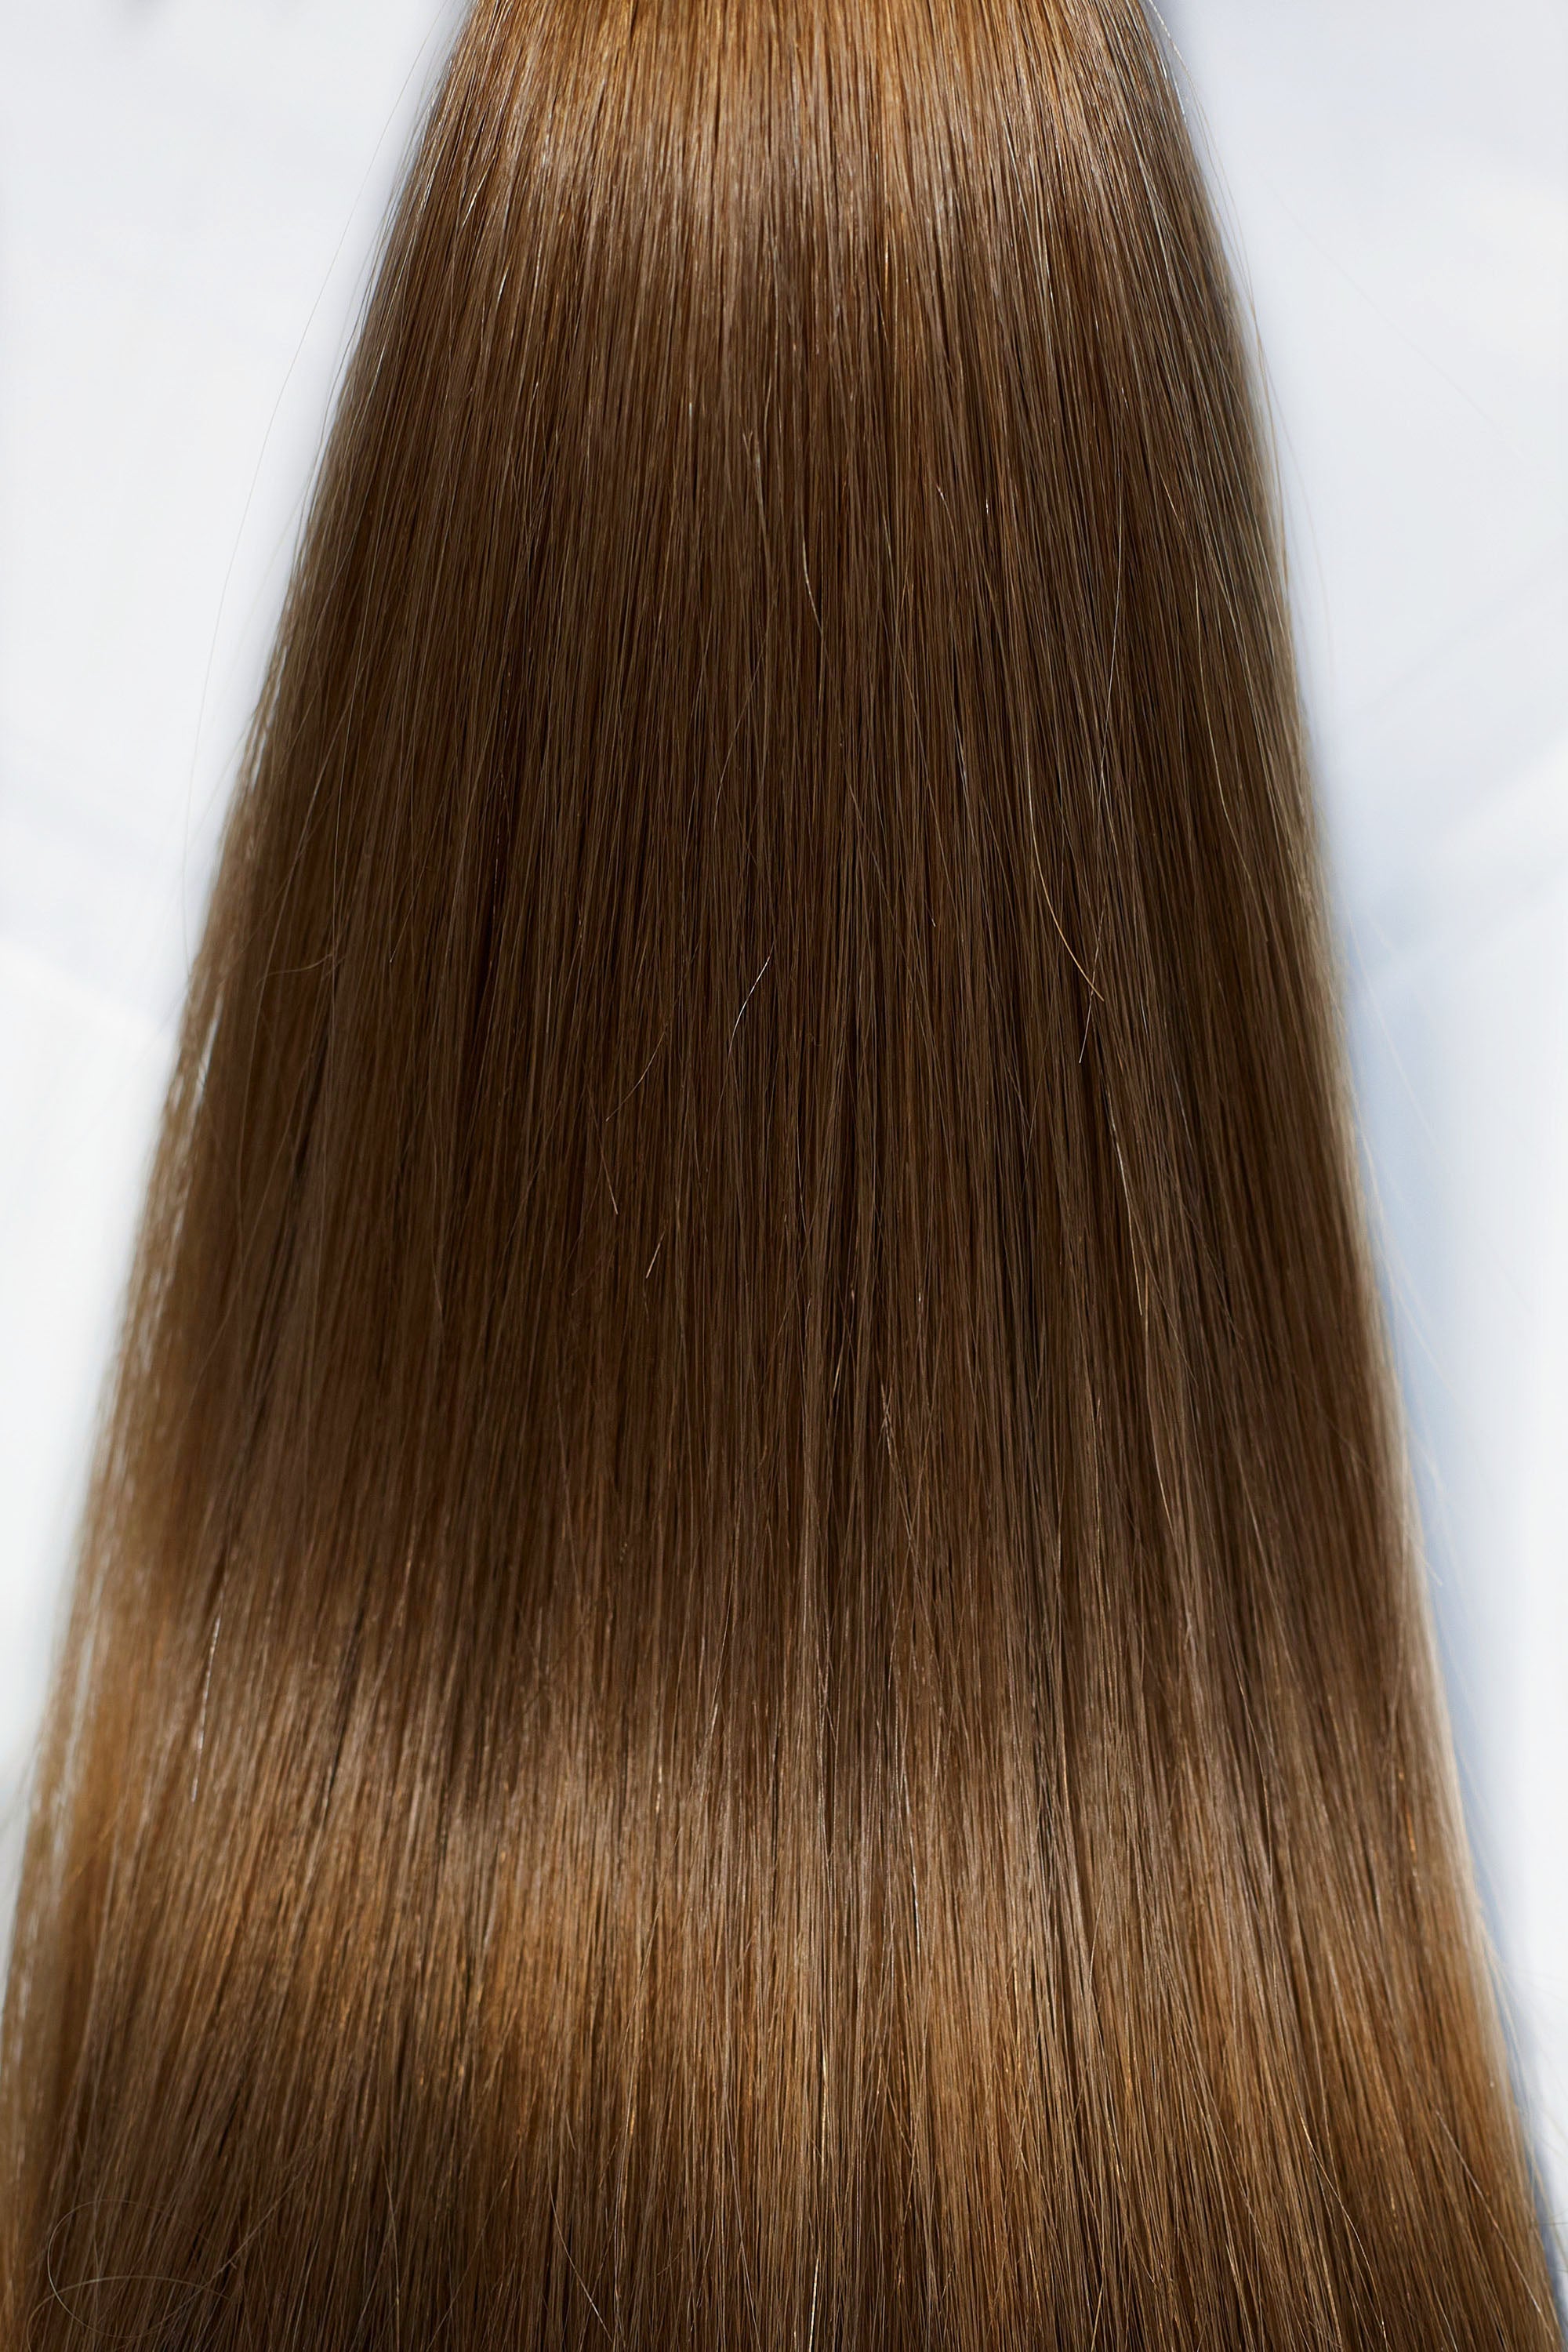 Behair professional Keratin Tip "Premium" 18" (45cm) Natural Straight Chestnut #6 - 25g (Micro - 0.5g each pcs) hair extensions